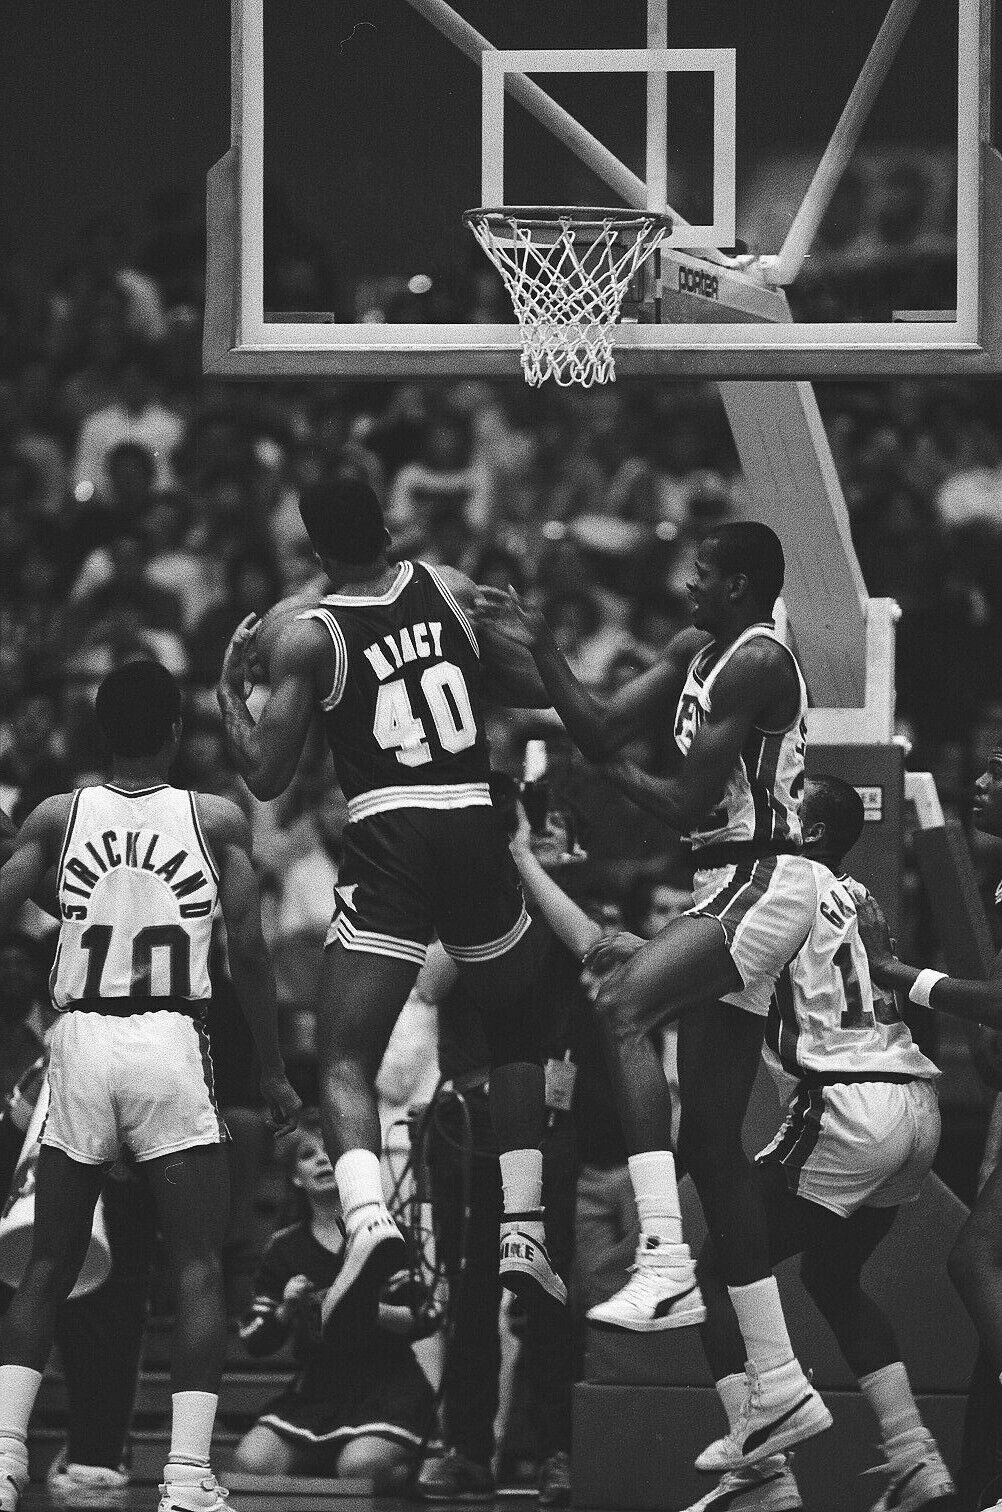 LD125-46 1986 College Basketball DePaul UAB Blazers (55) ORIG 35mm B&W NEGATIVES Без бренда - фотография #9